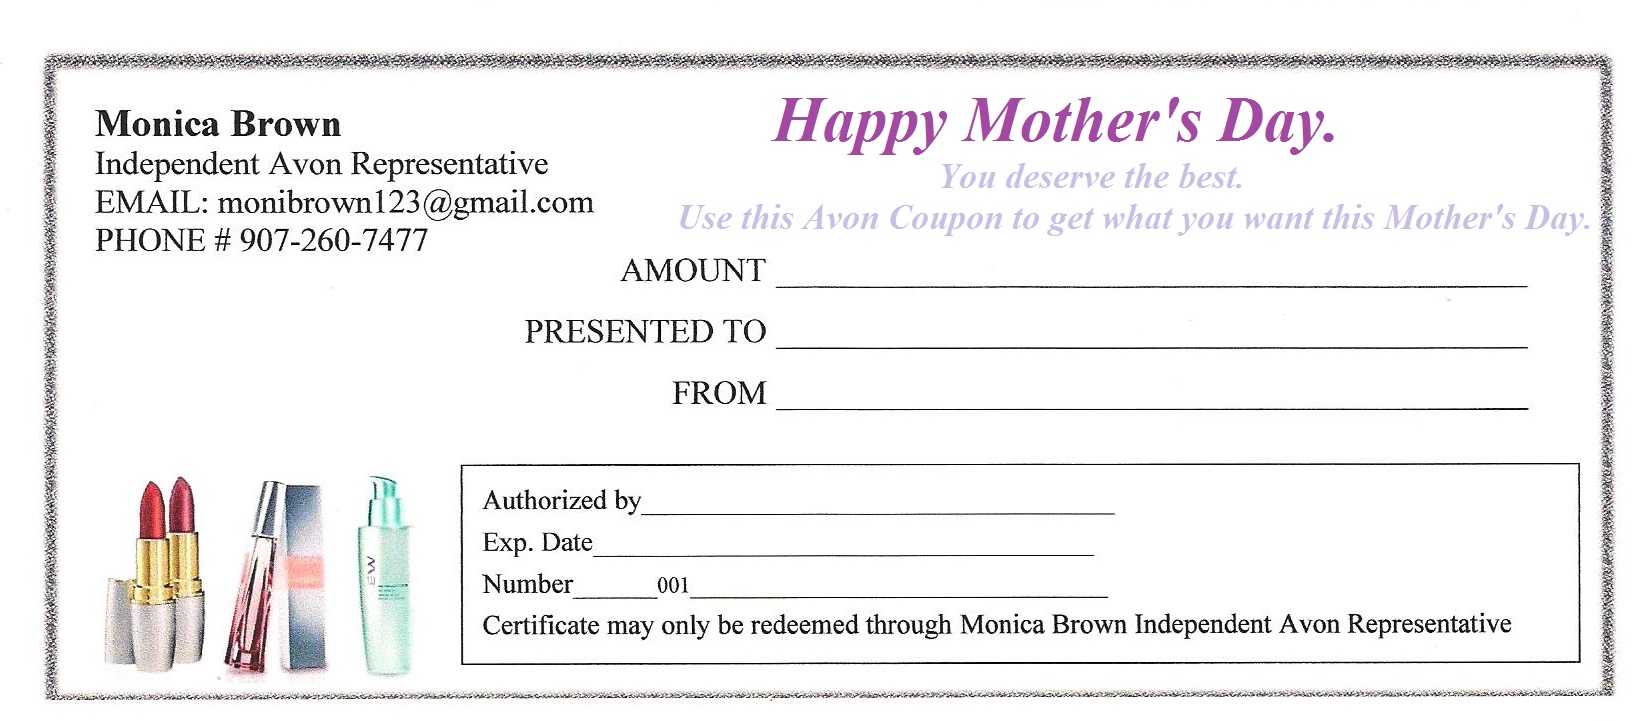 Avon Gift Certificate Avon Beauty Rep Monica